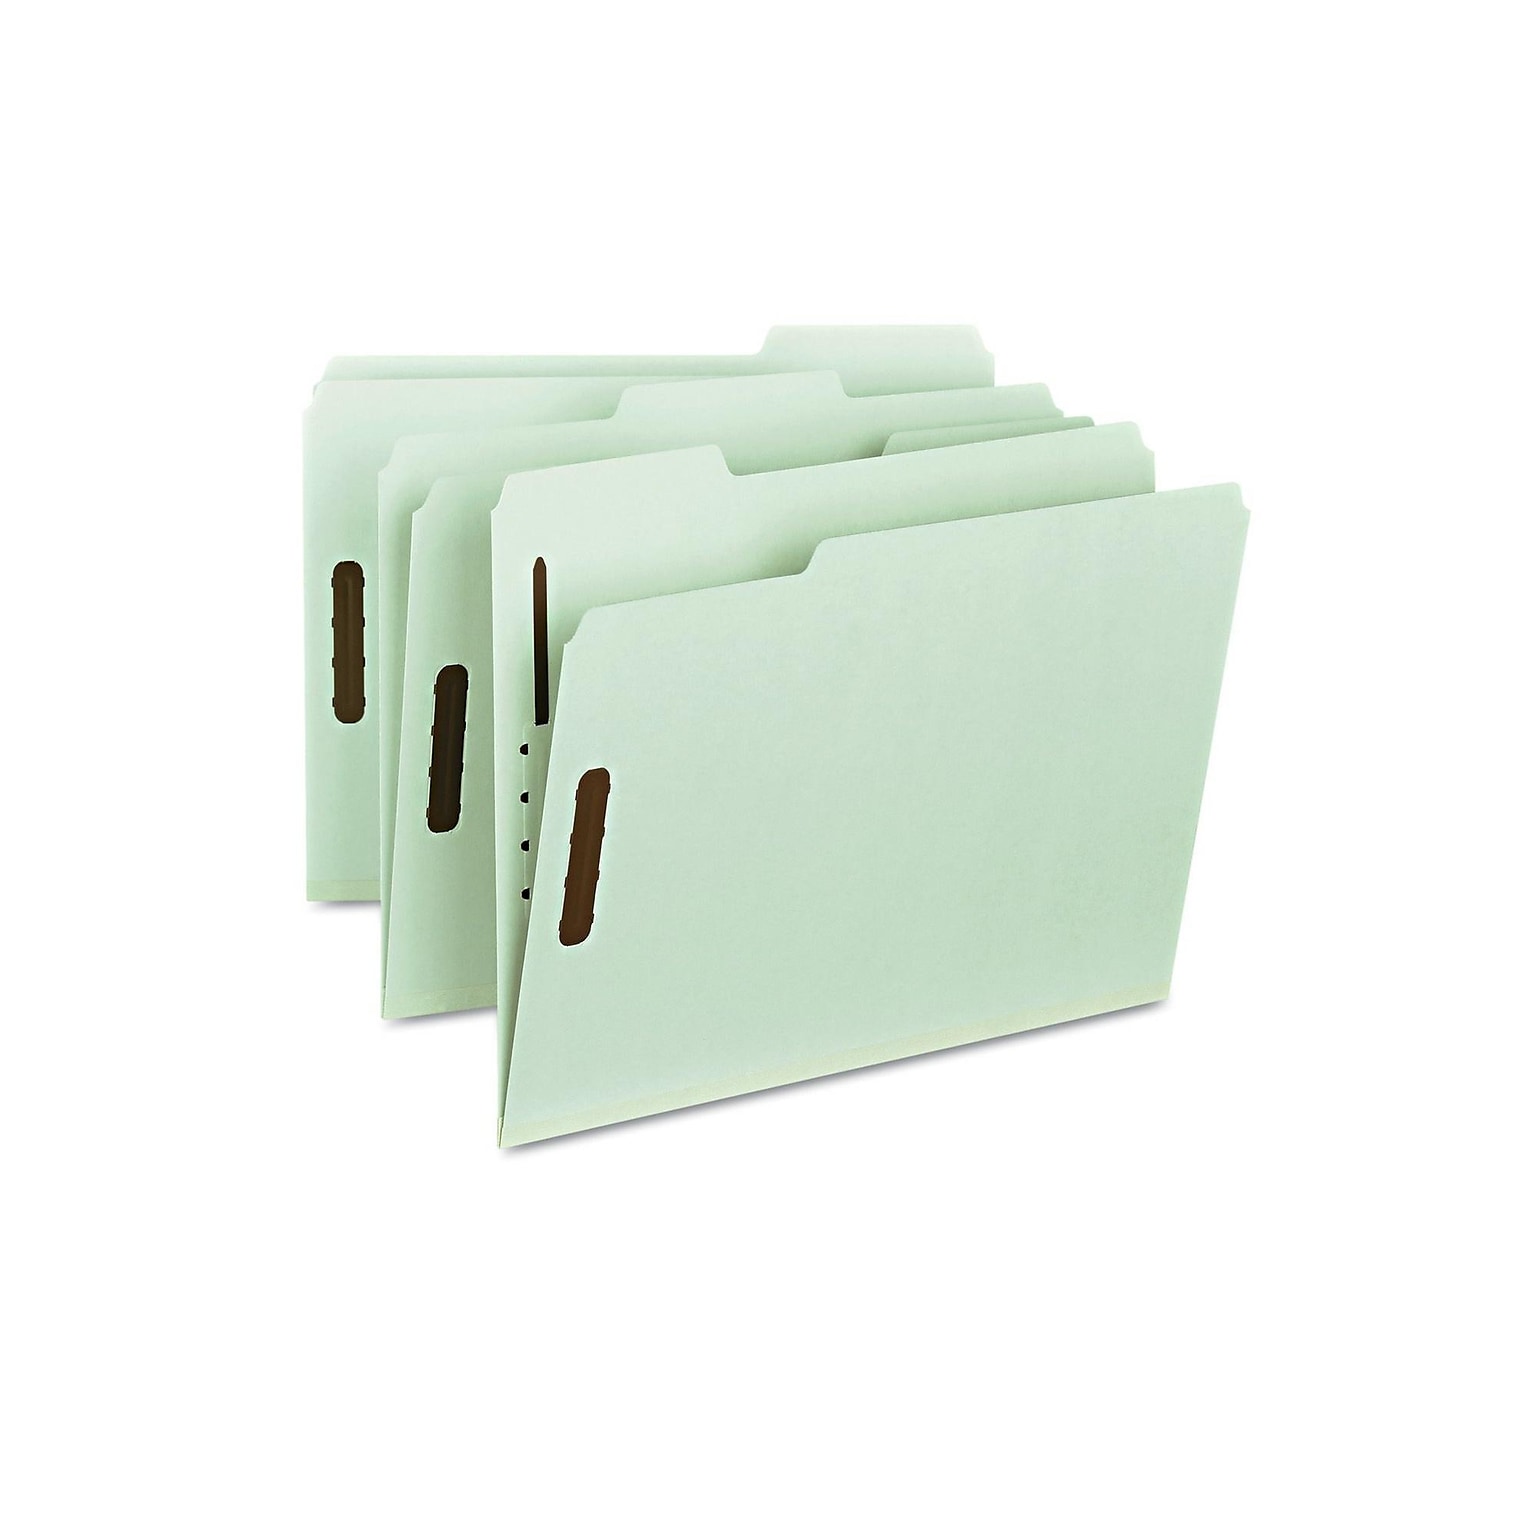 Smead 100% Recycled Pressboard Classification Folders, Letter Size, Gray/Green, 25/Box (15003)